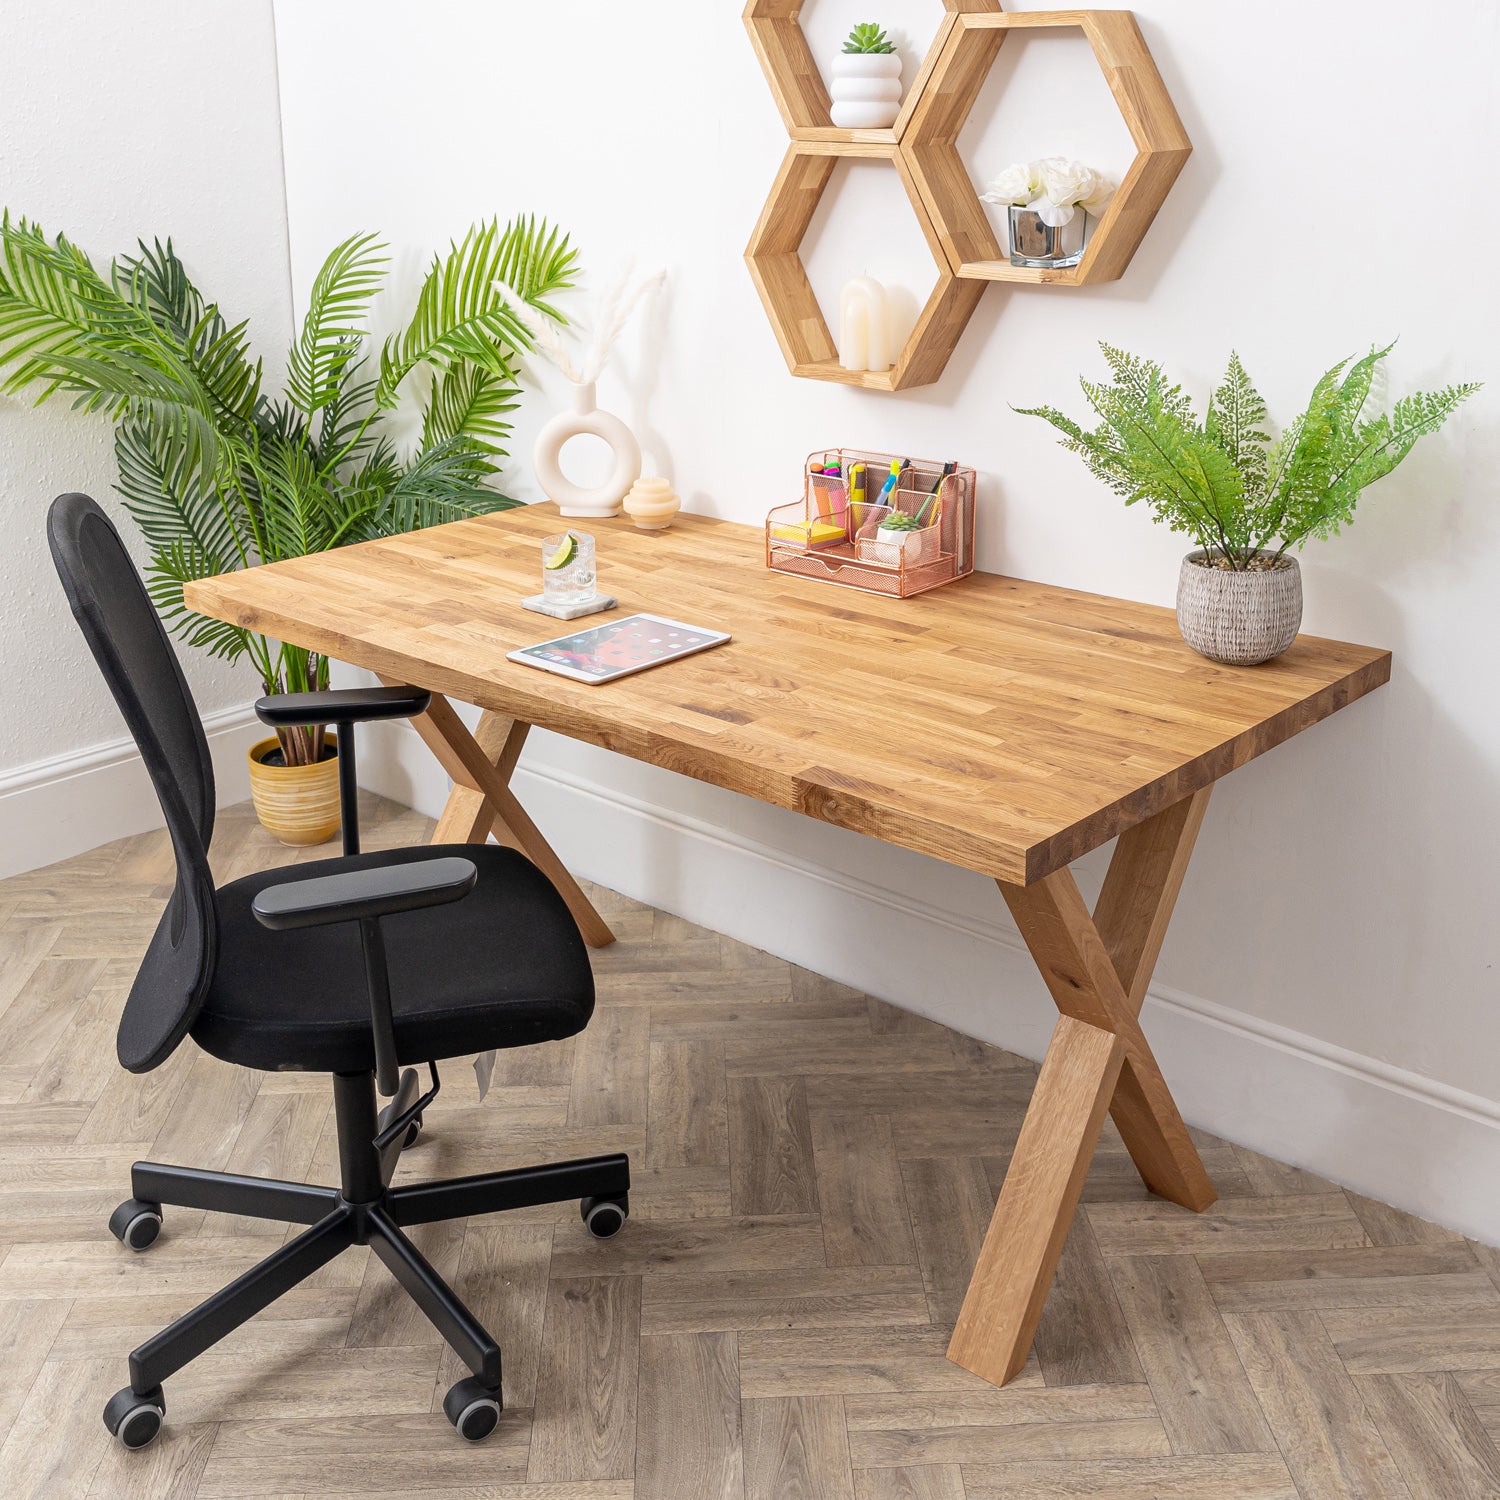 Oak Solid Wood Desk With Wooden X Legs - 40mm Thick Desktop